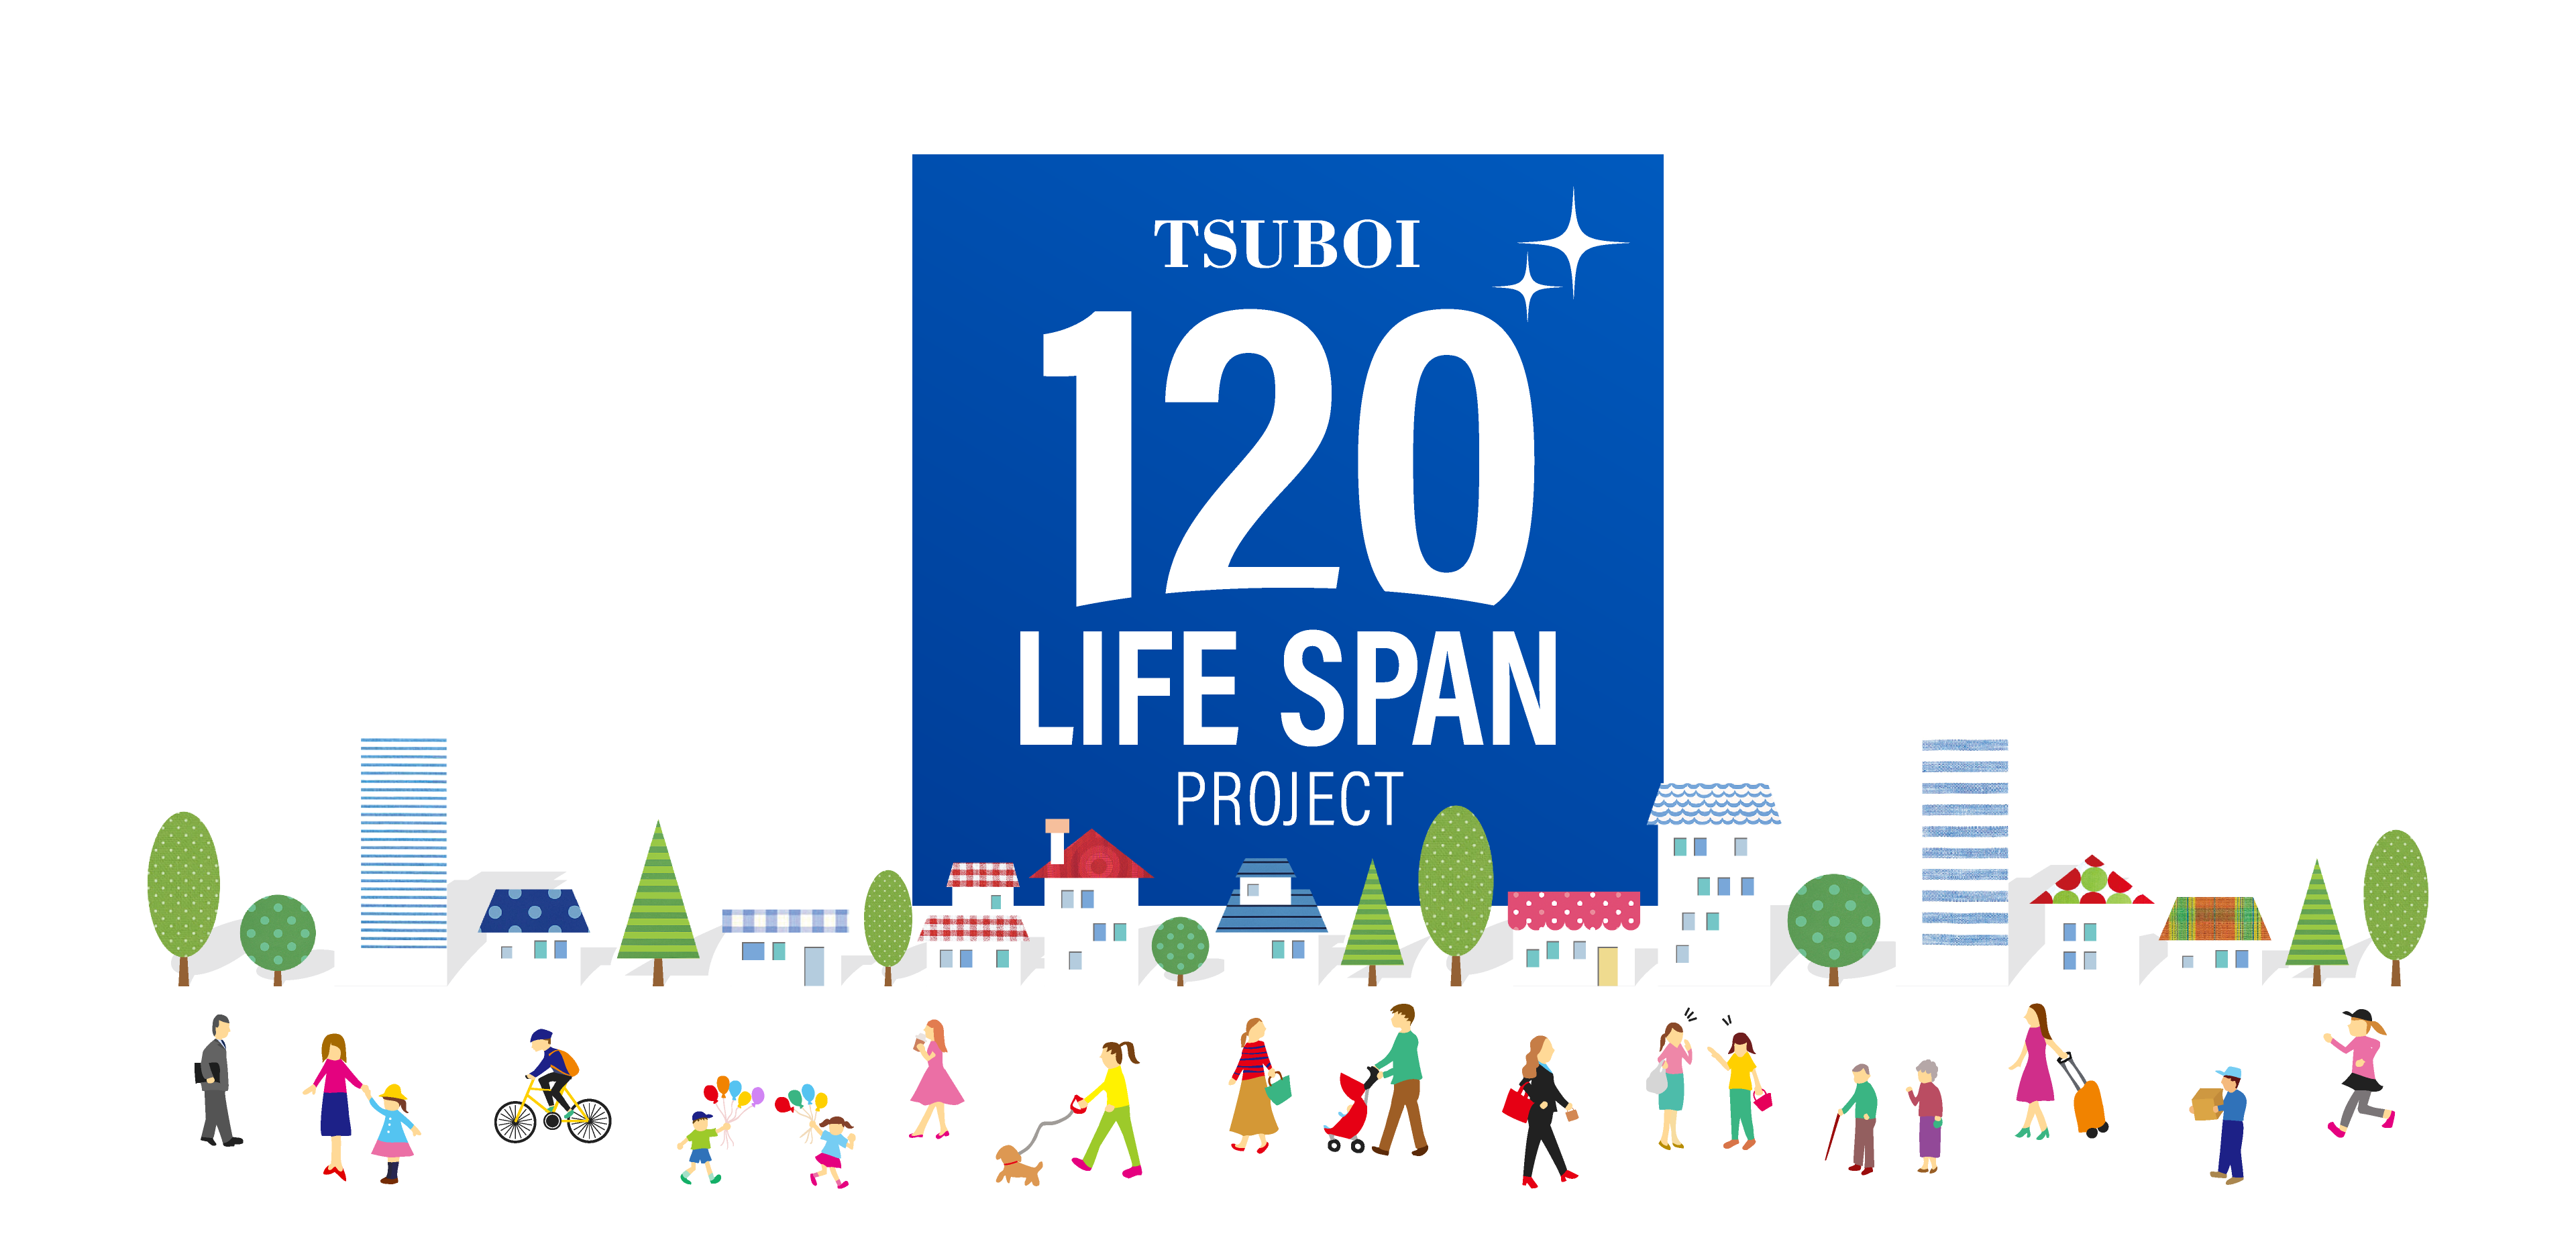 TSUBOI 120 LIFE SPAN PROJECT